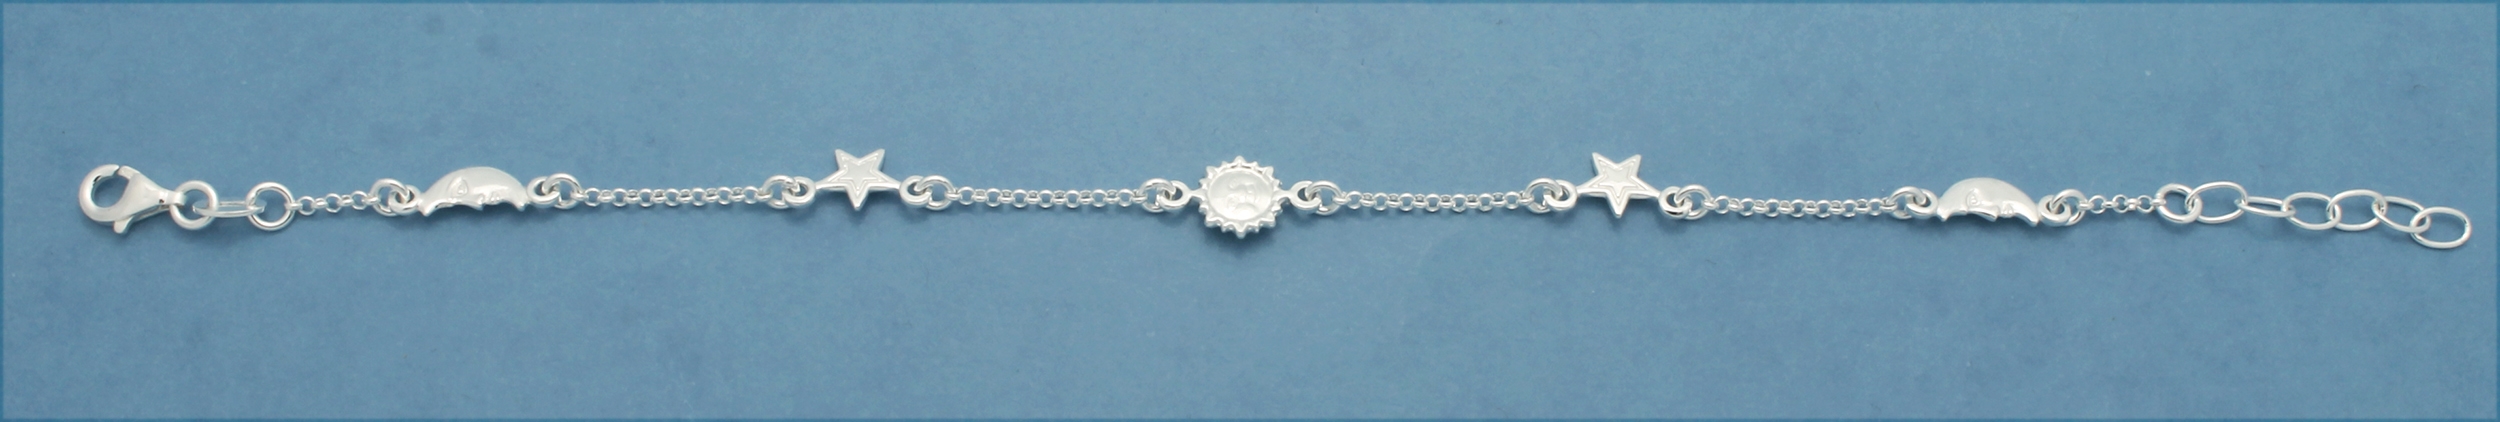 DJ88448B/3 Silver Charm Bracelet